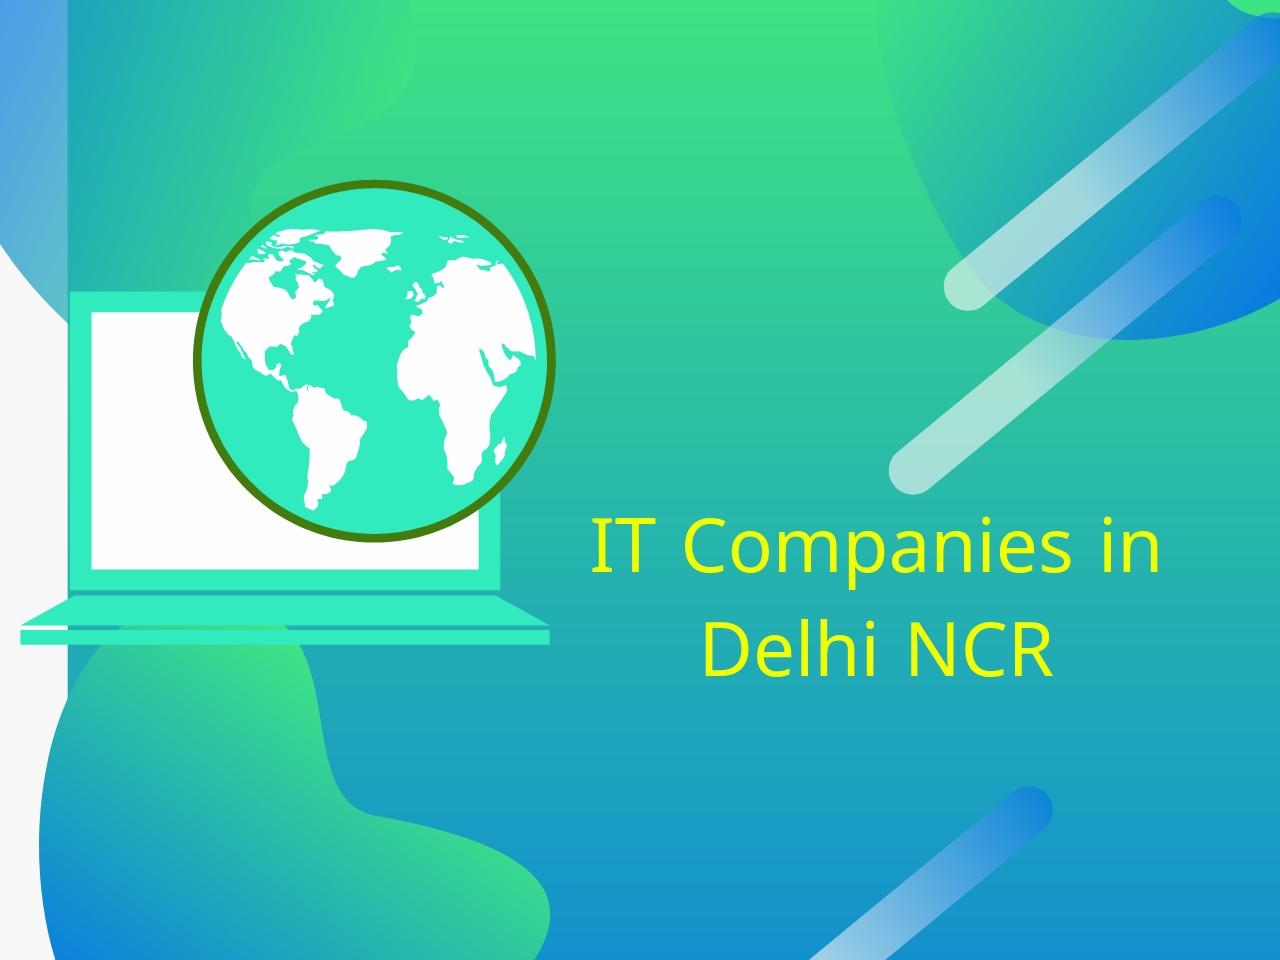 IT Companies in Delhi NCR